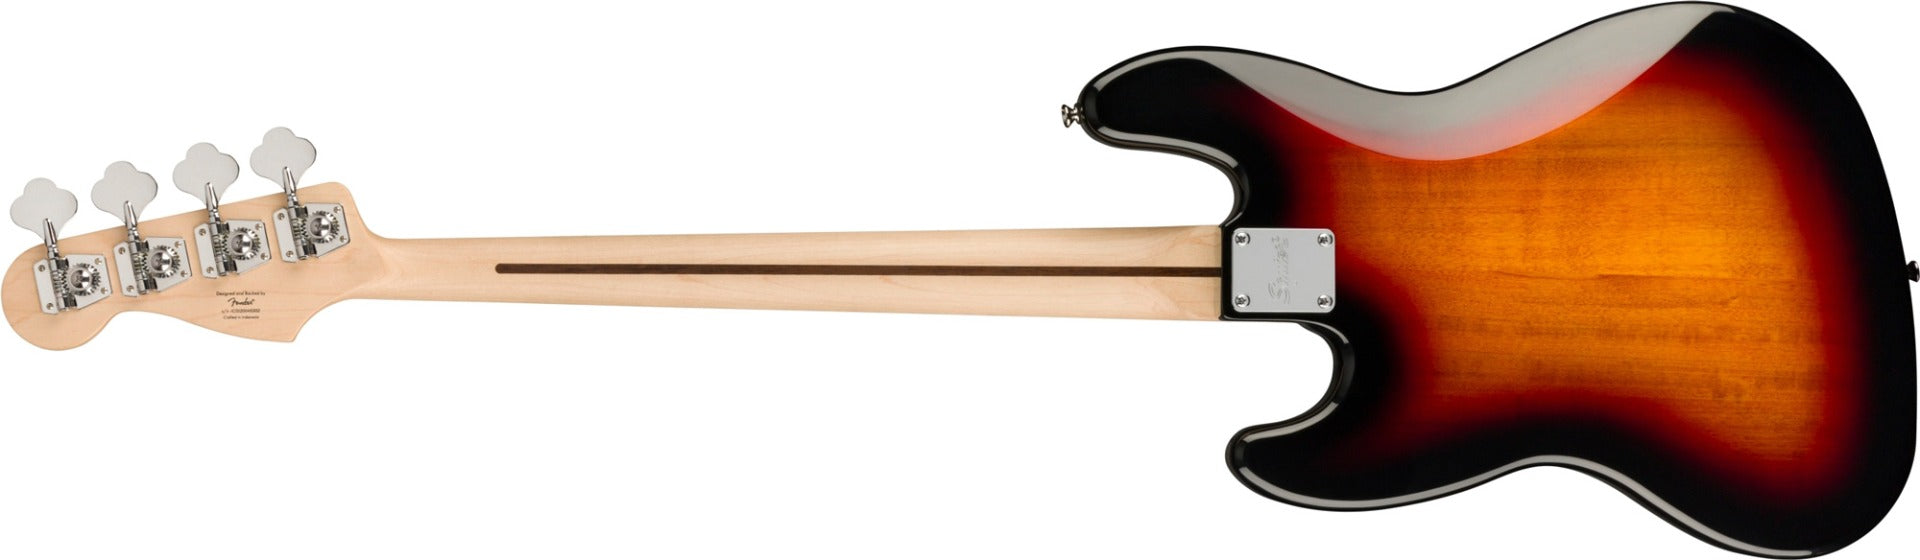 Squier Affinity Jazz Bass - Maple, 3-Color Sunburst back